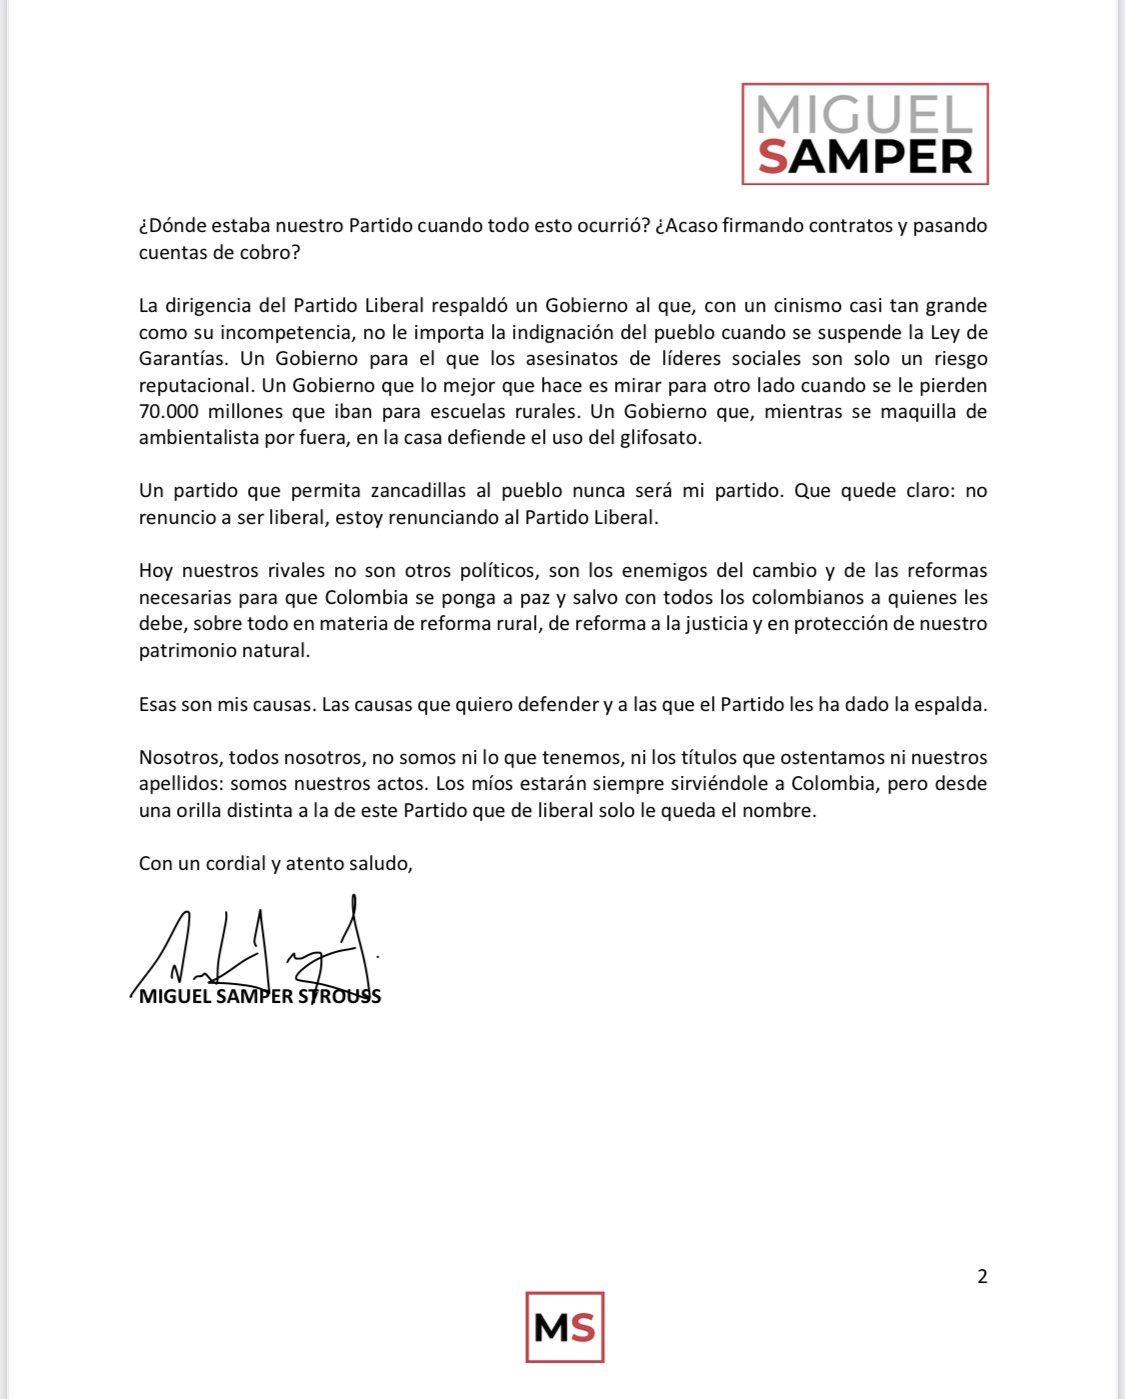 Carta de renuncia al Partido Liberal de Miguel Samper.